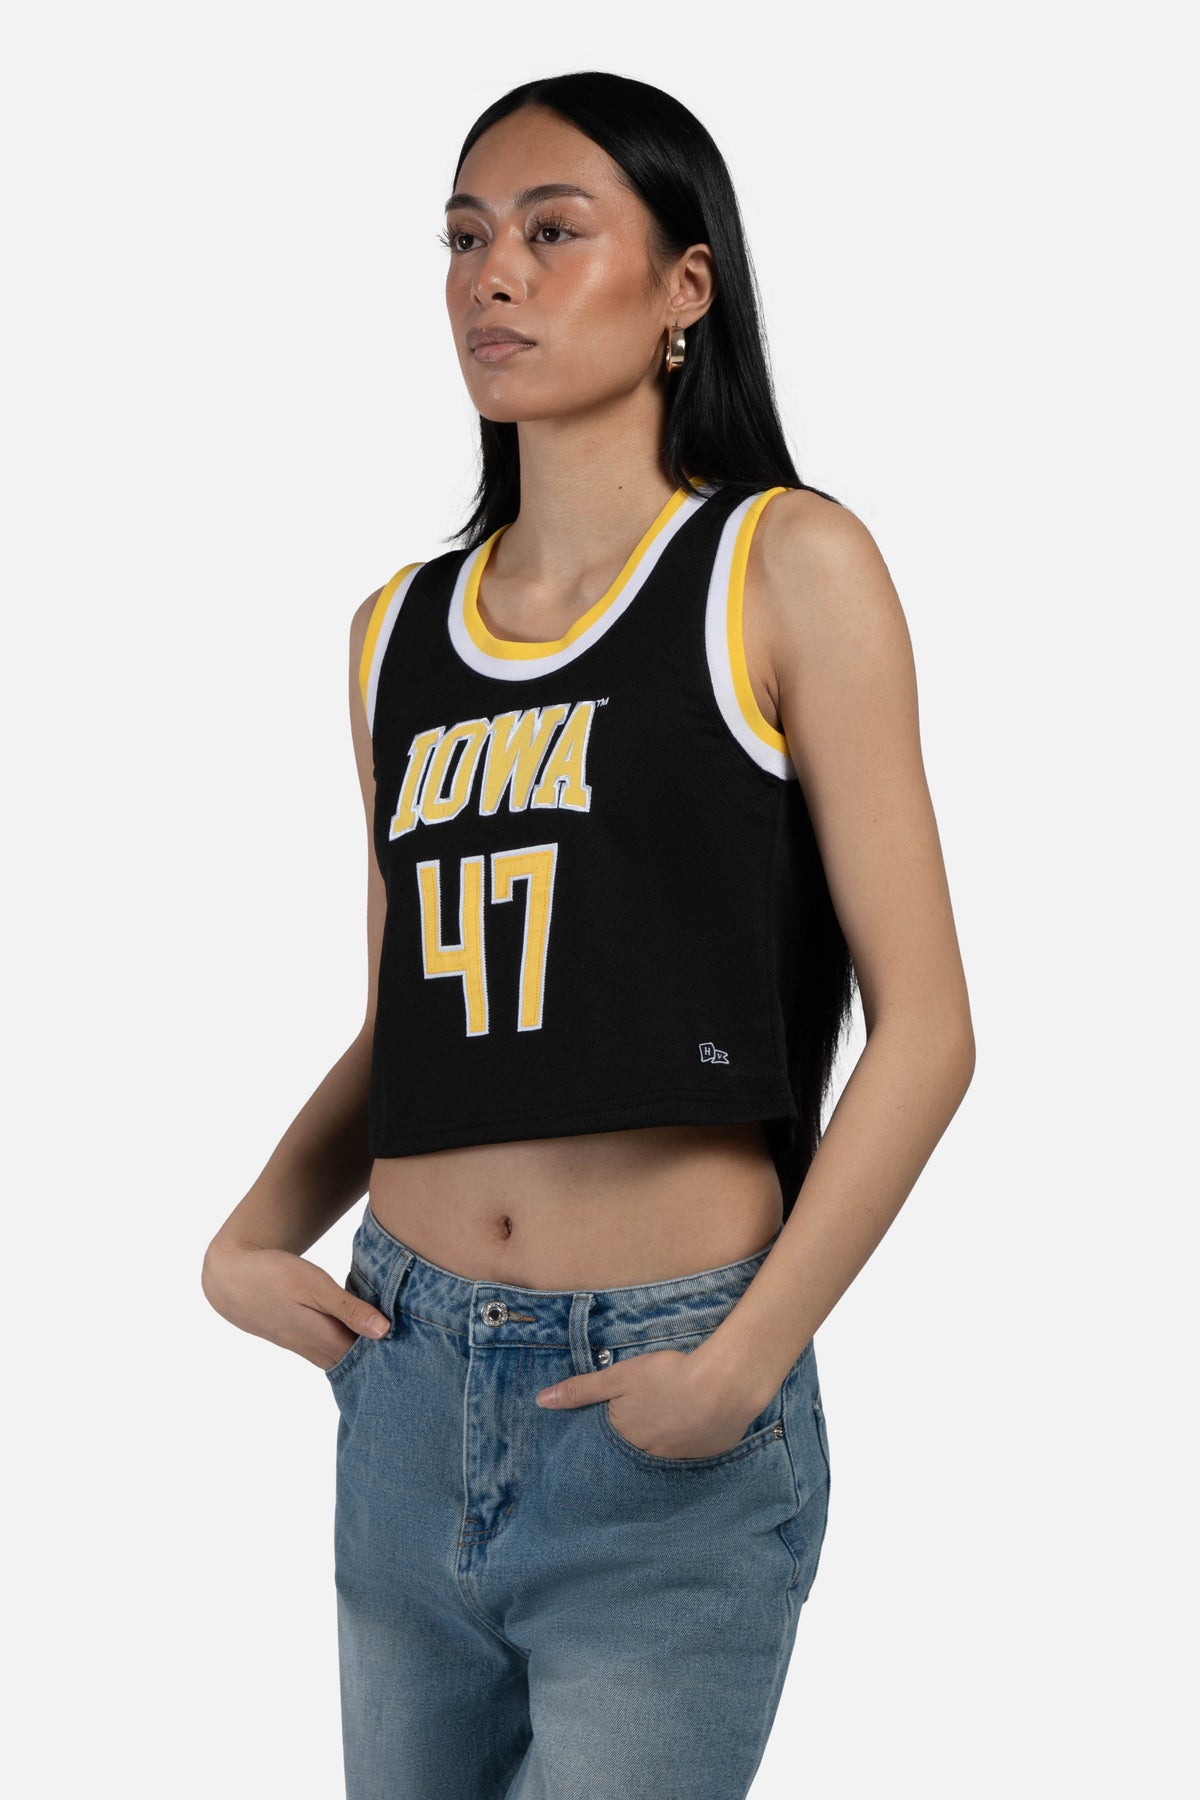 University of Iowa Basketball Top